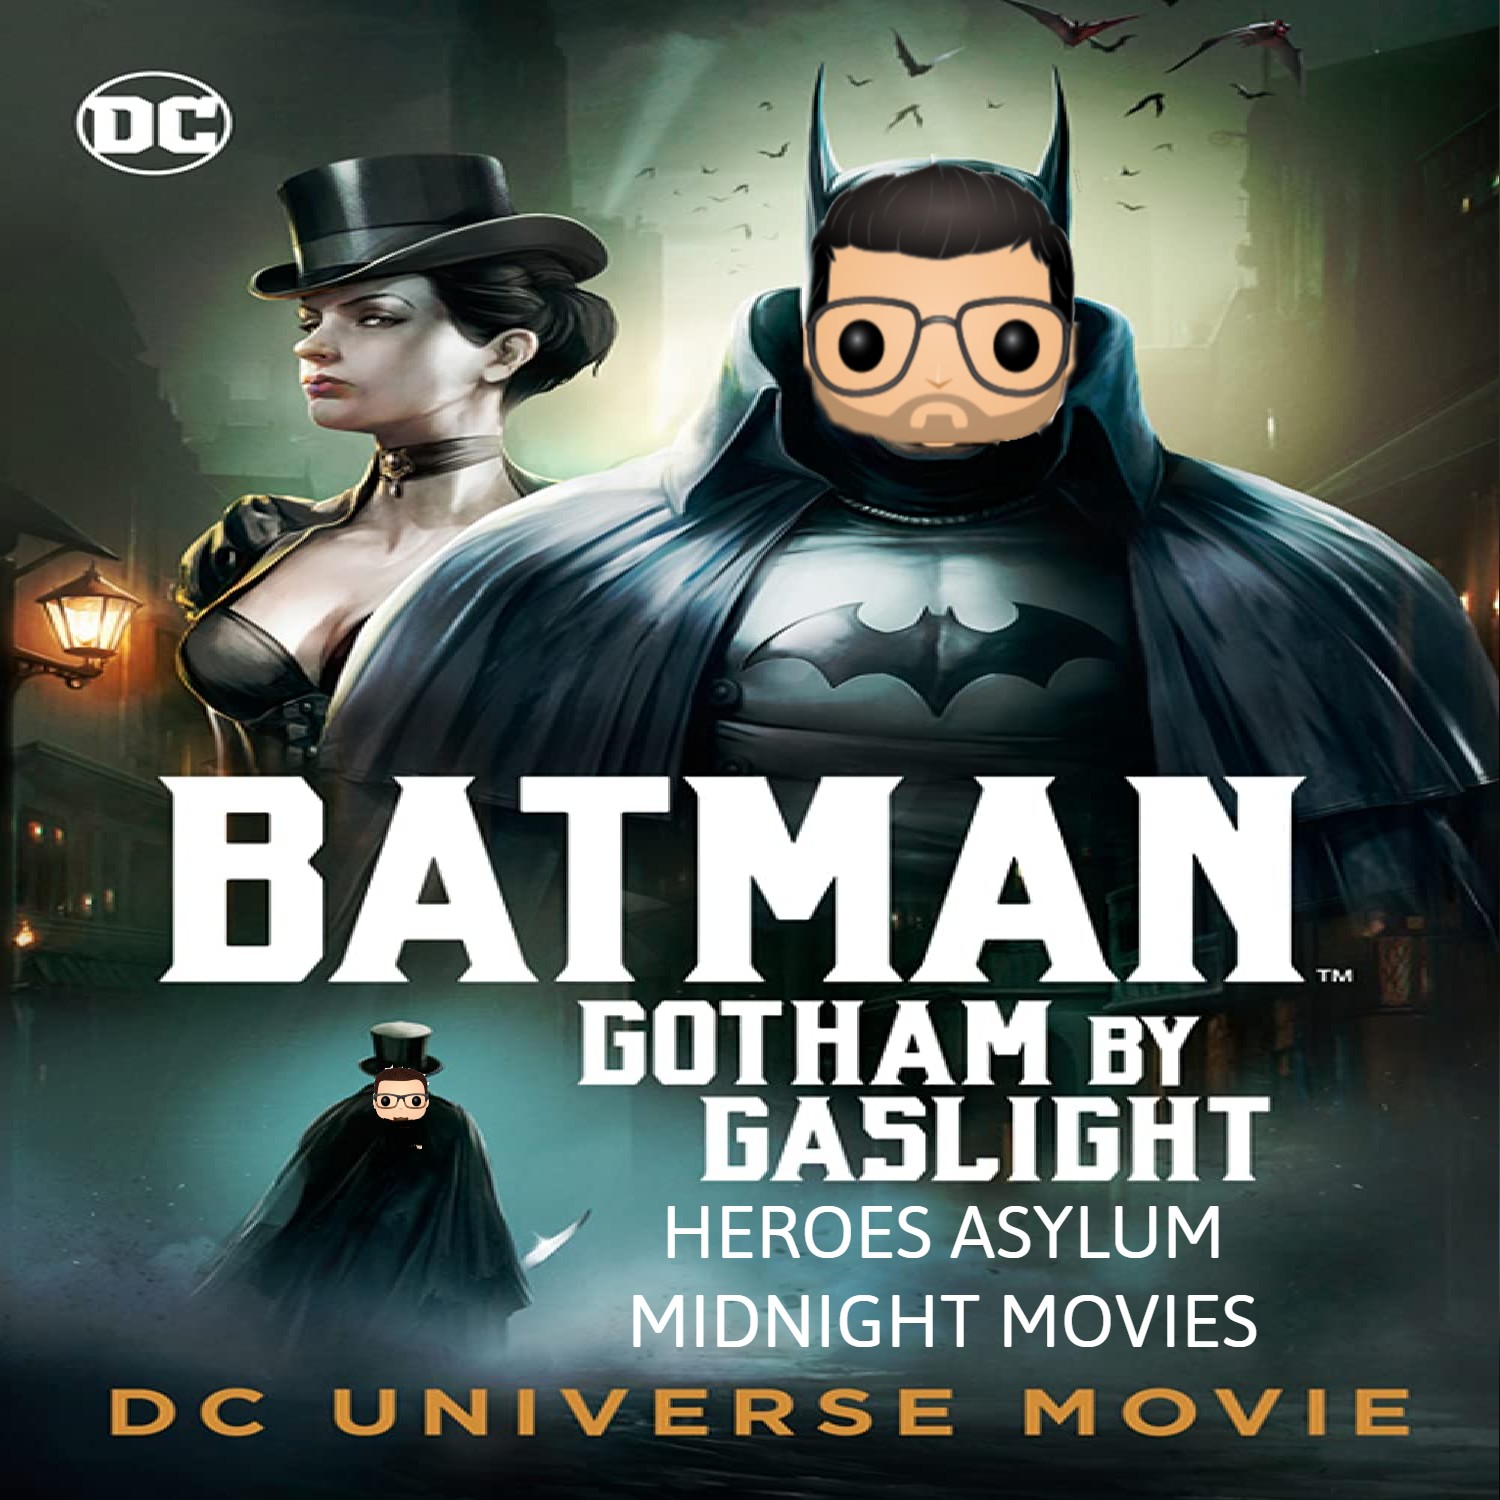 Batman Gotham by Gaslight Review